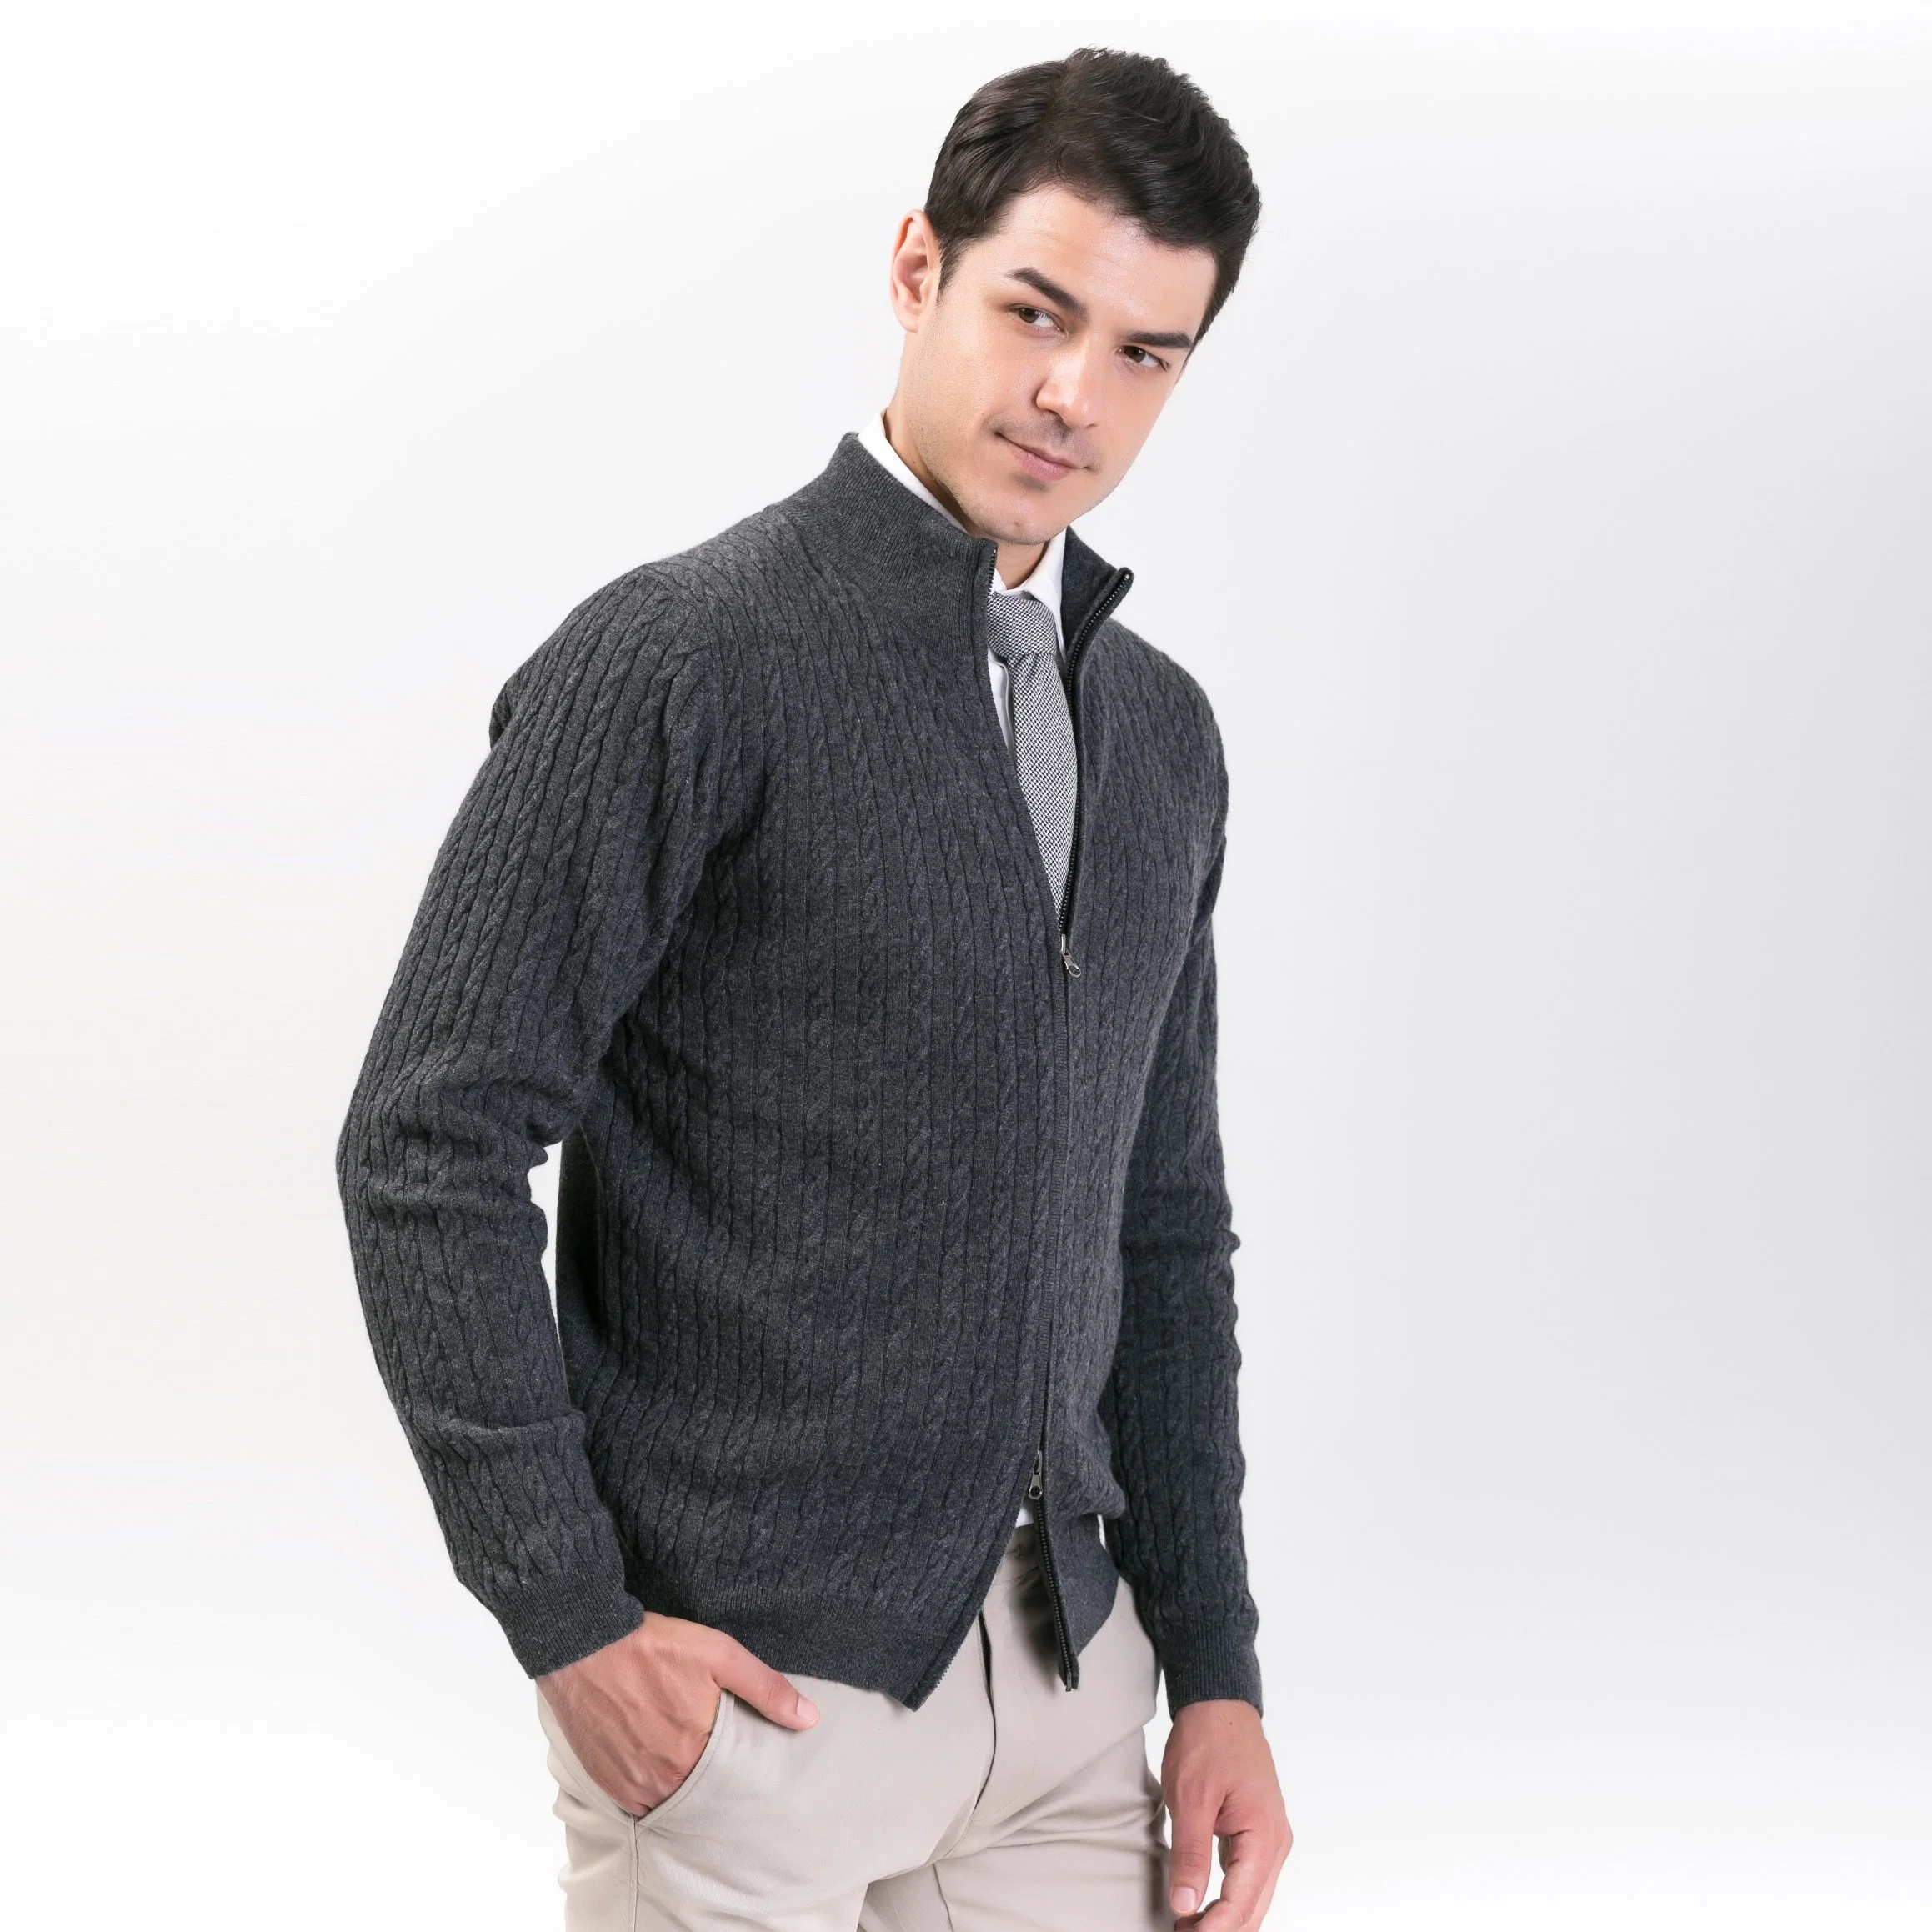 Herren′ Mode Wolle Kaschmir Strickjacke mit doppeltem Reißverschluss Pullover